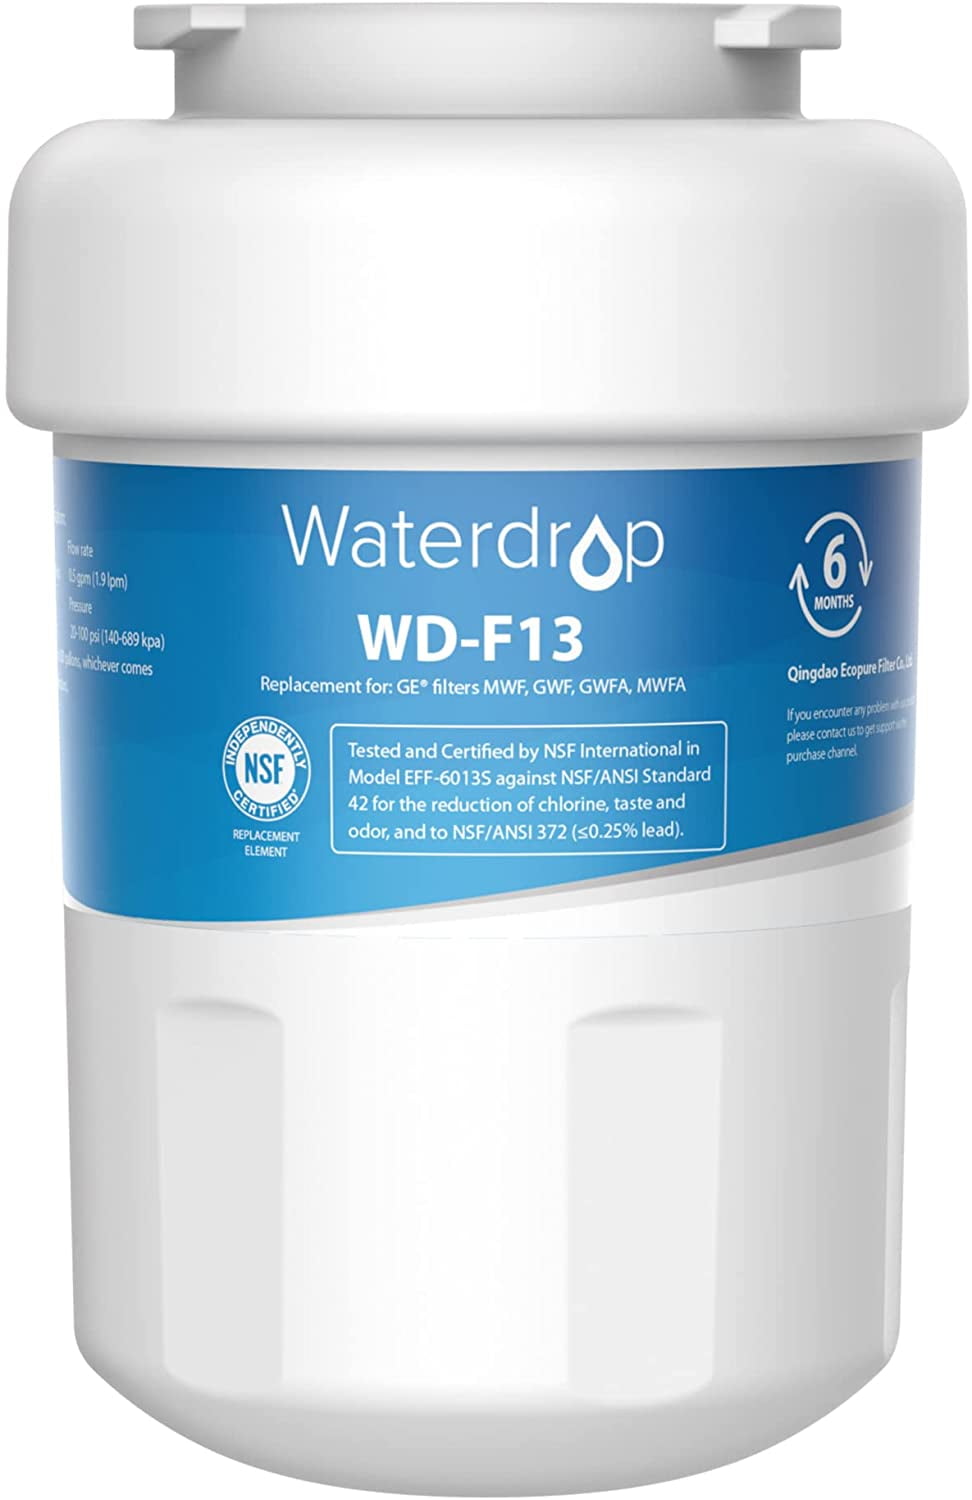 HDX FMG-1 MWFINT SmartWater MWFA Compatible Models: MWF GWF MWFAP GWFA Pack of 2 HWFA MWFP MWF Water Filter Replacement HWF